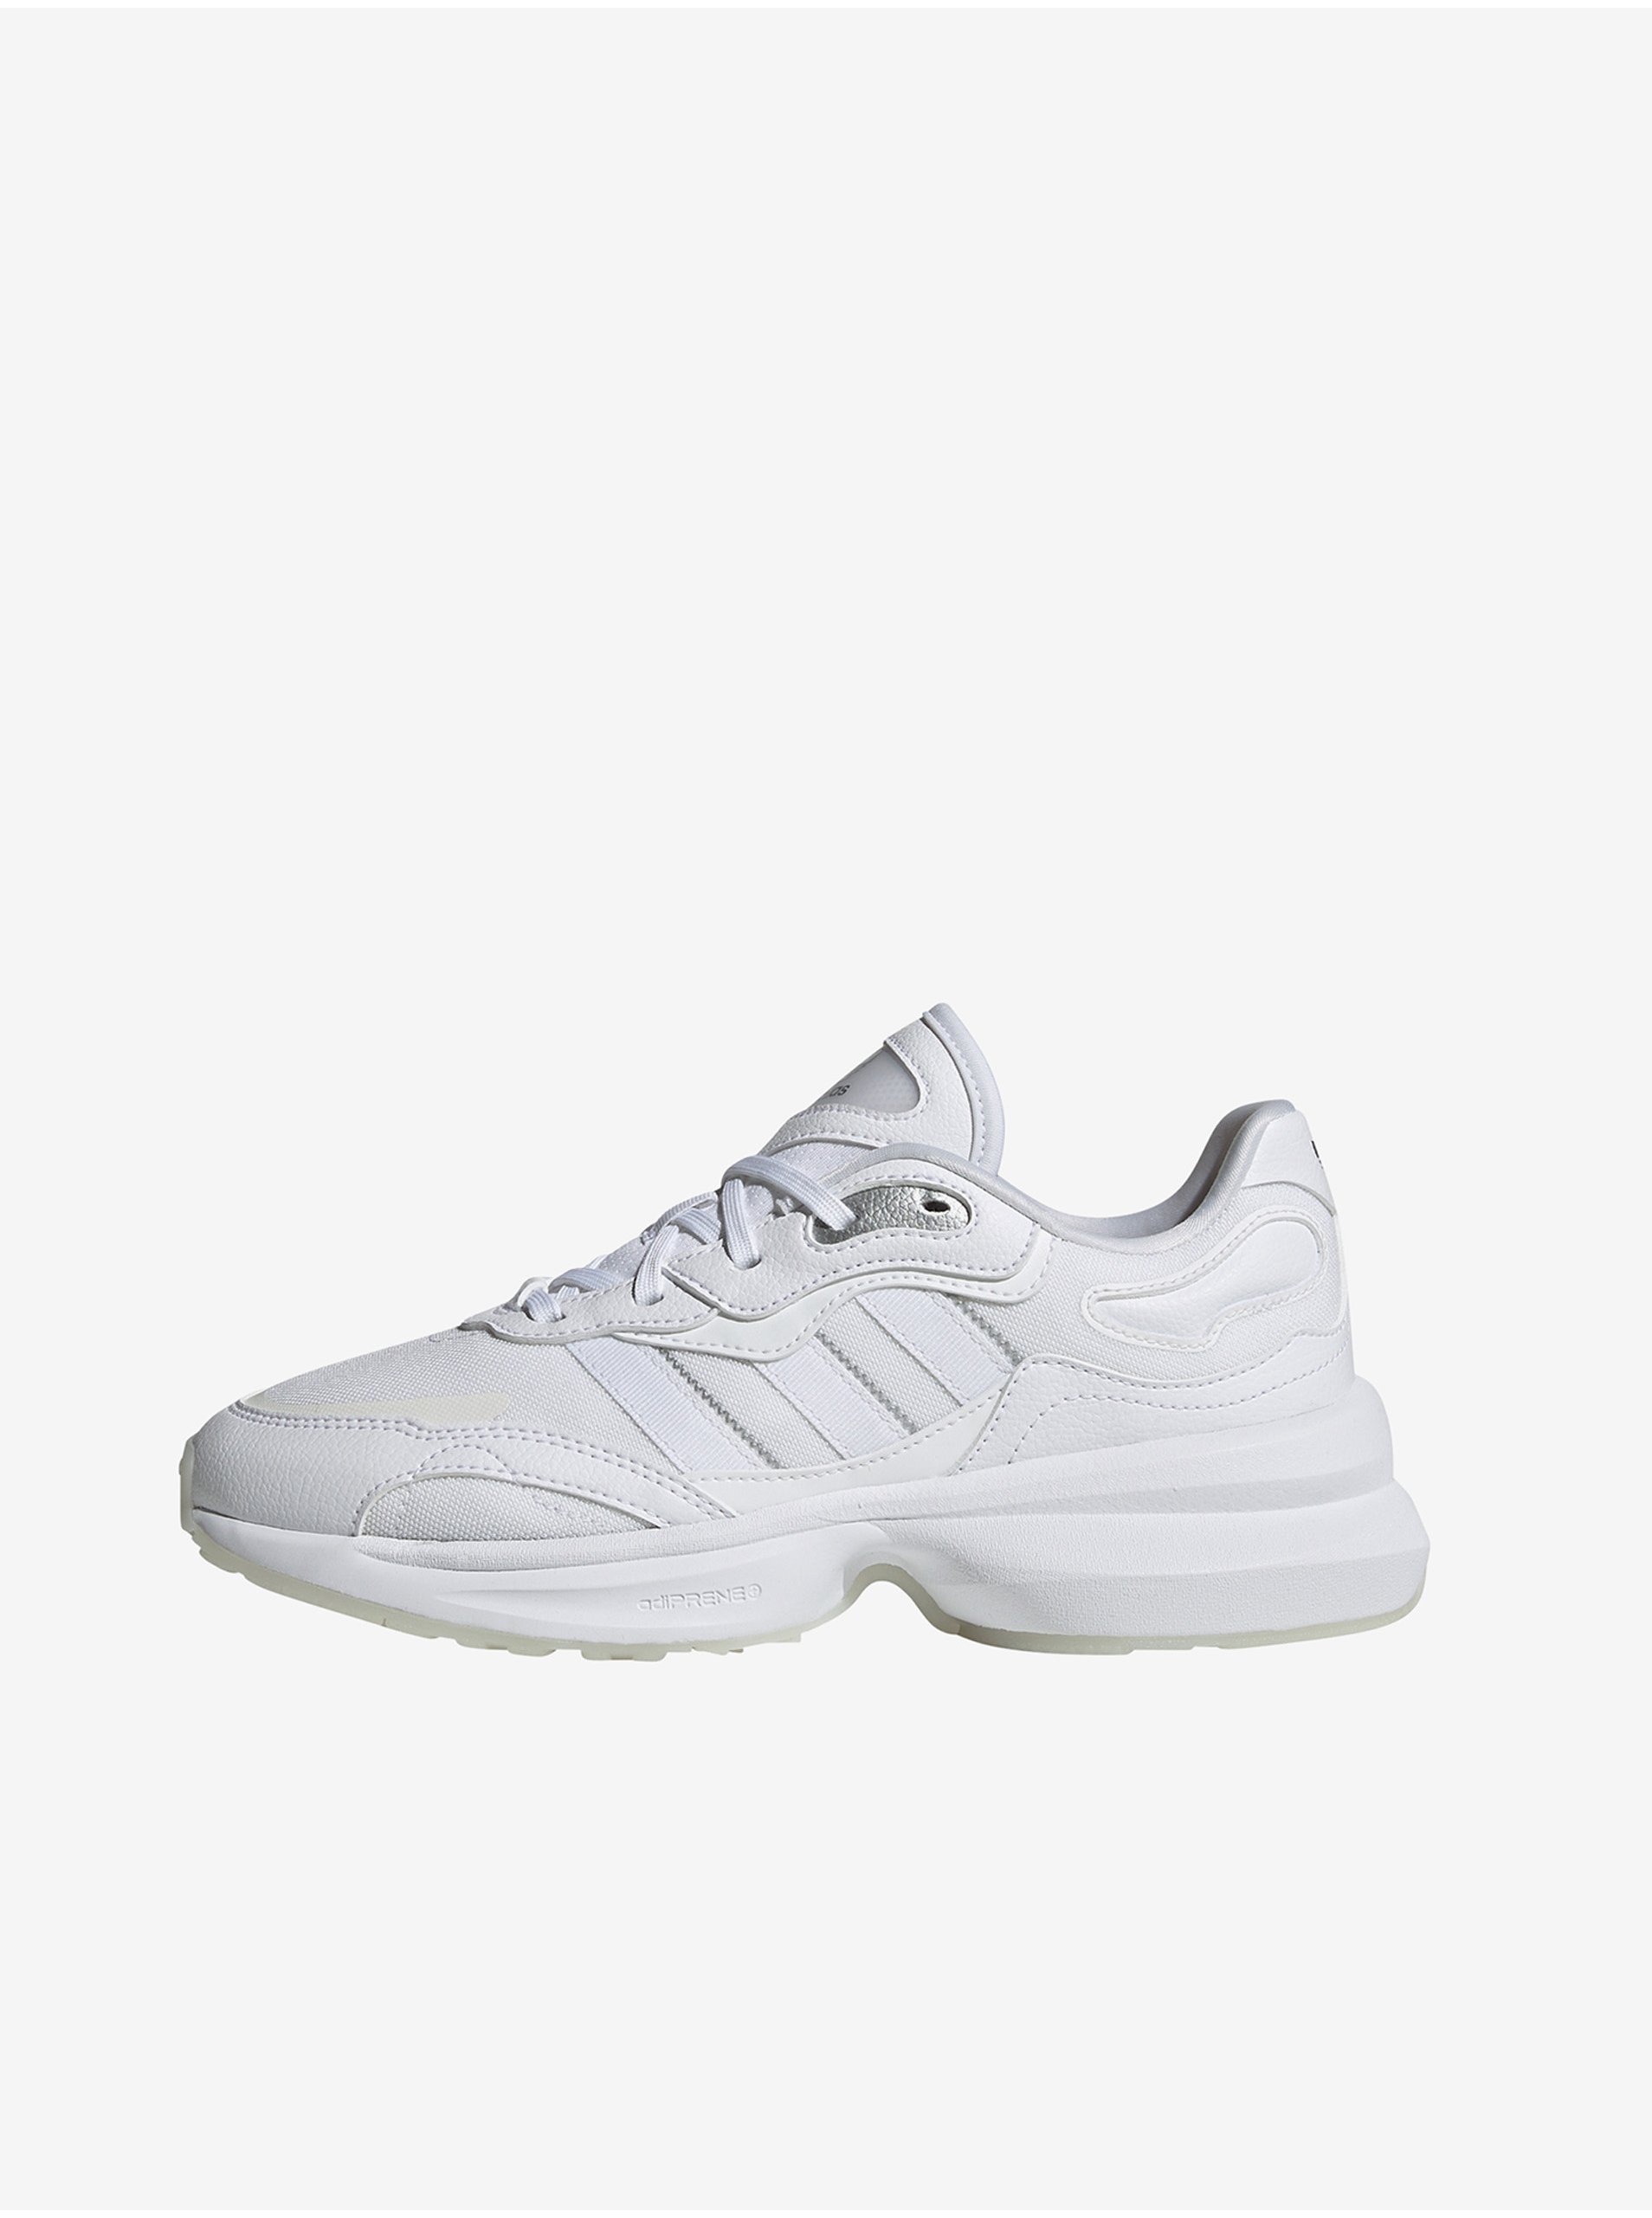 E-shop Biele dámske tenisky adidas Originals Zentic